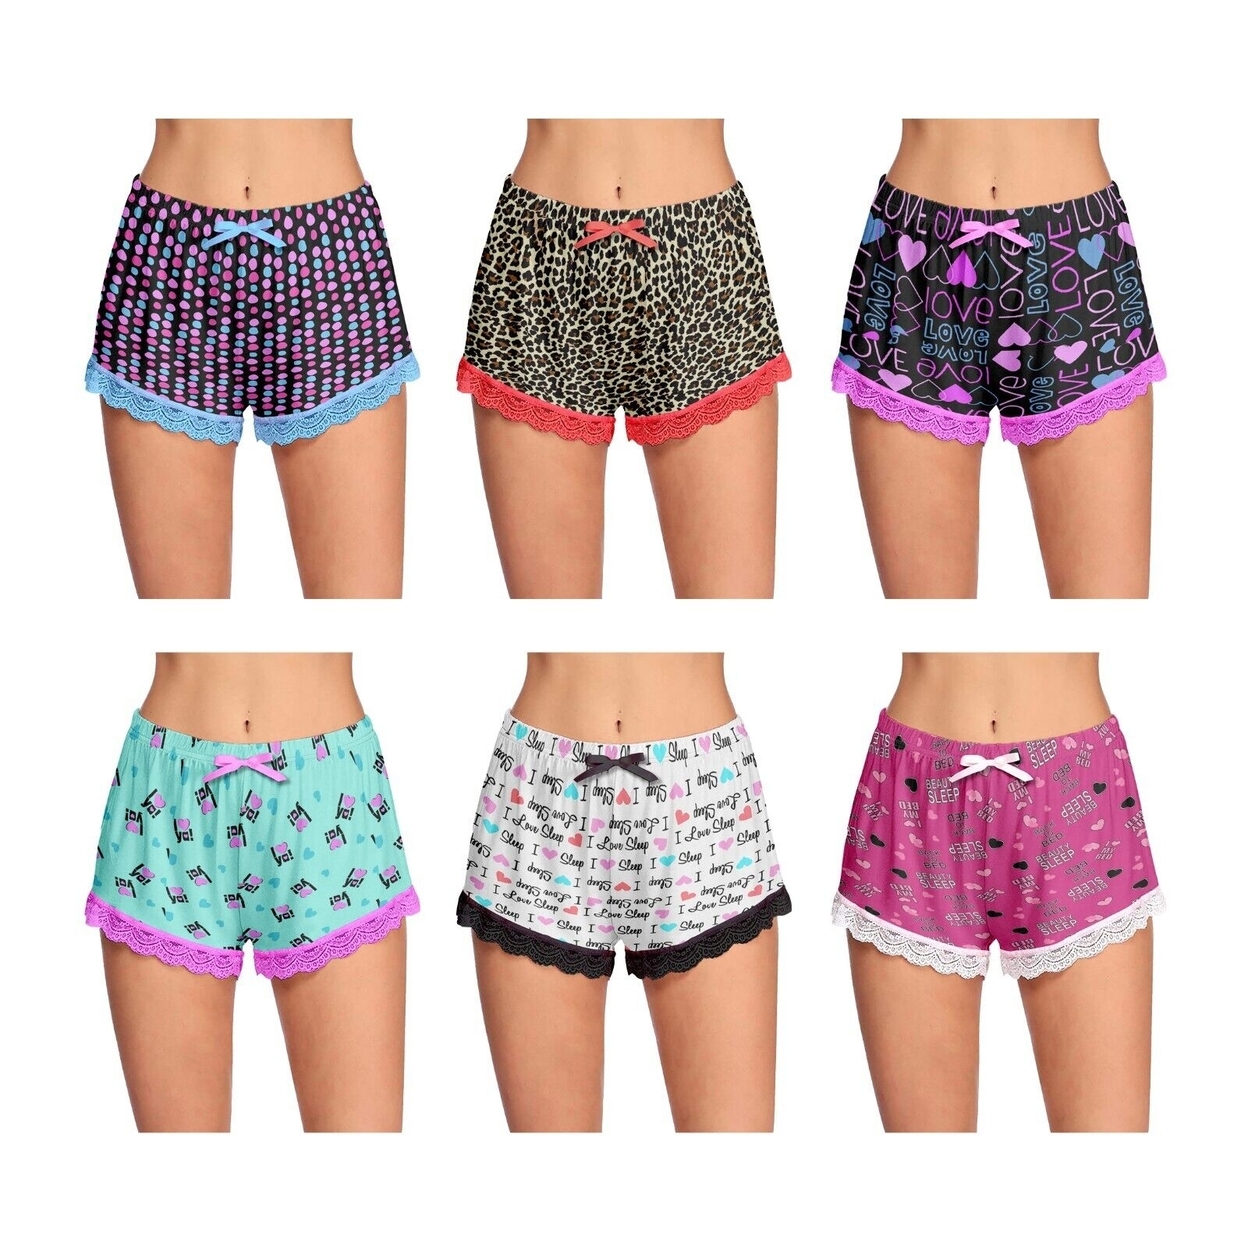 4-Pack: Women's Ultra-Soft Cozy Fun Printed Lace Trim Pajama Lounge Shorts - Medium, Shapes